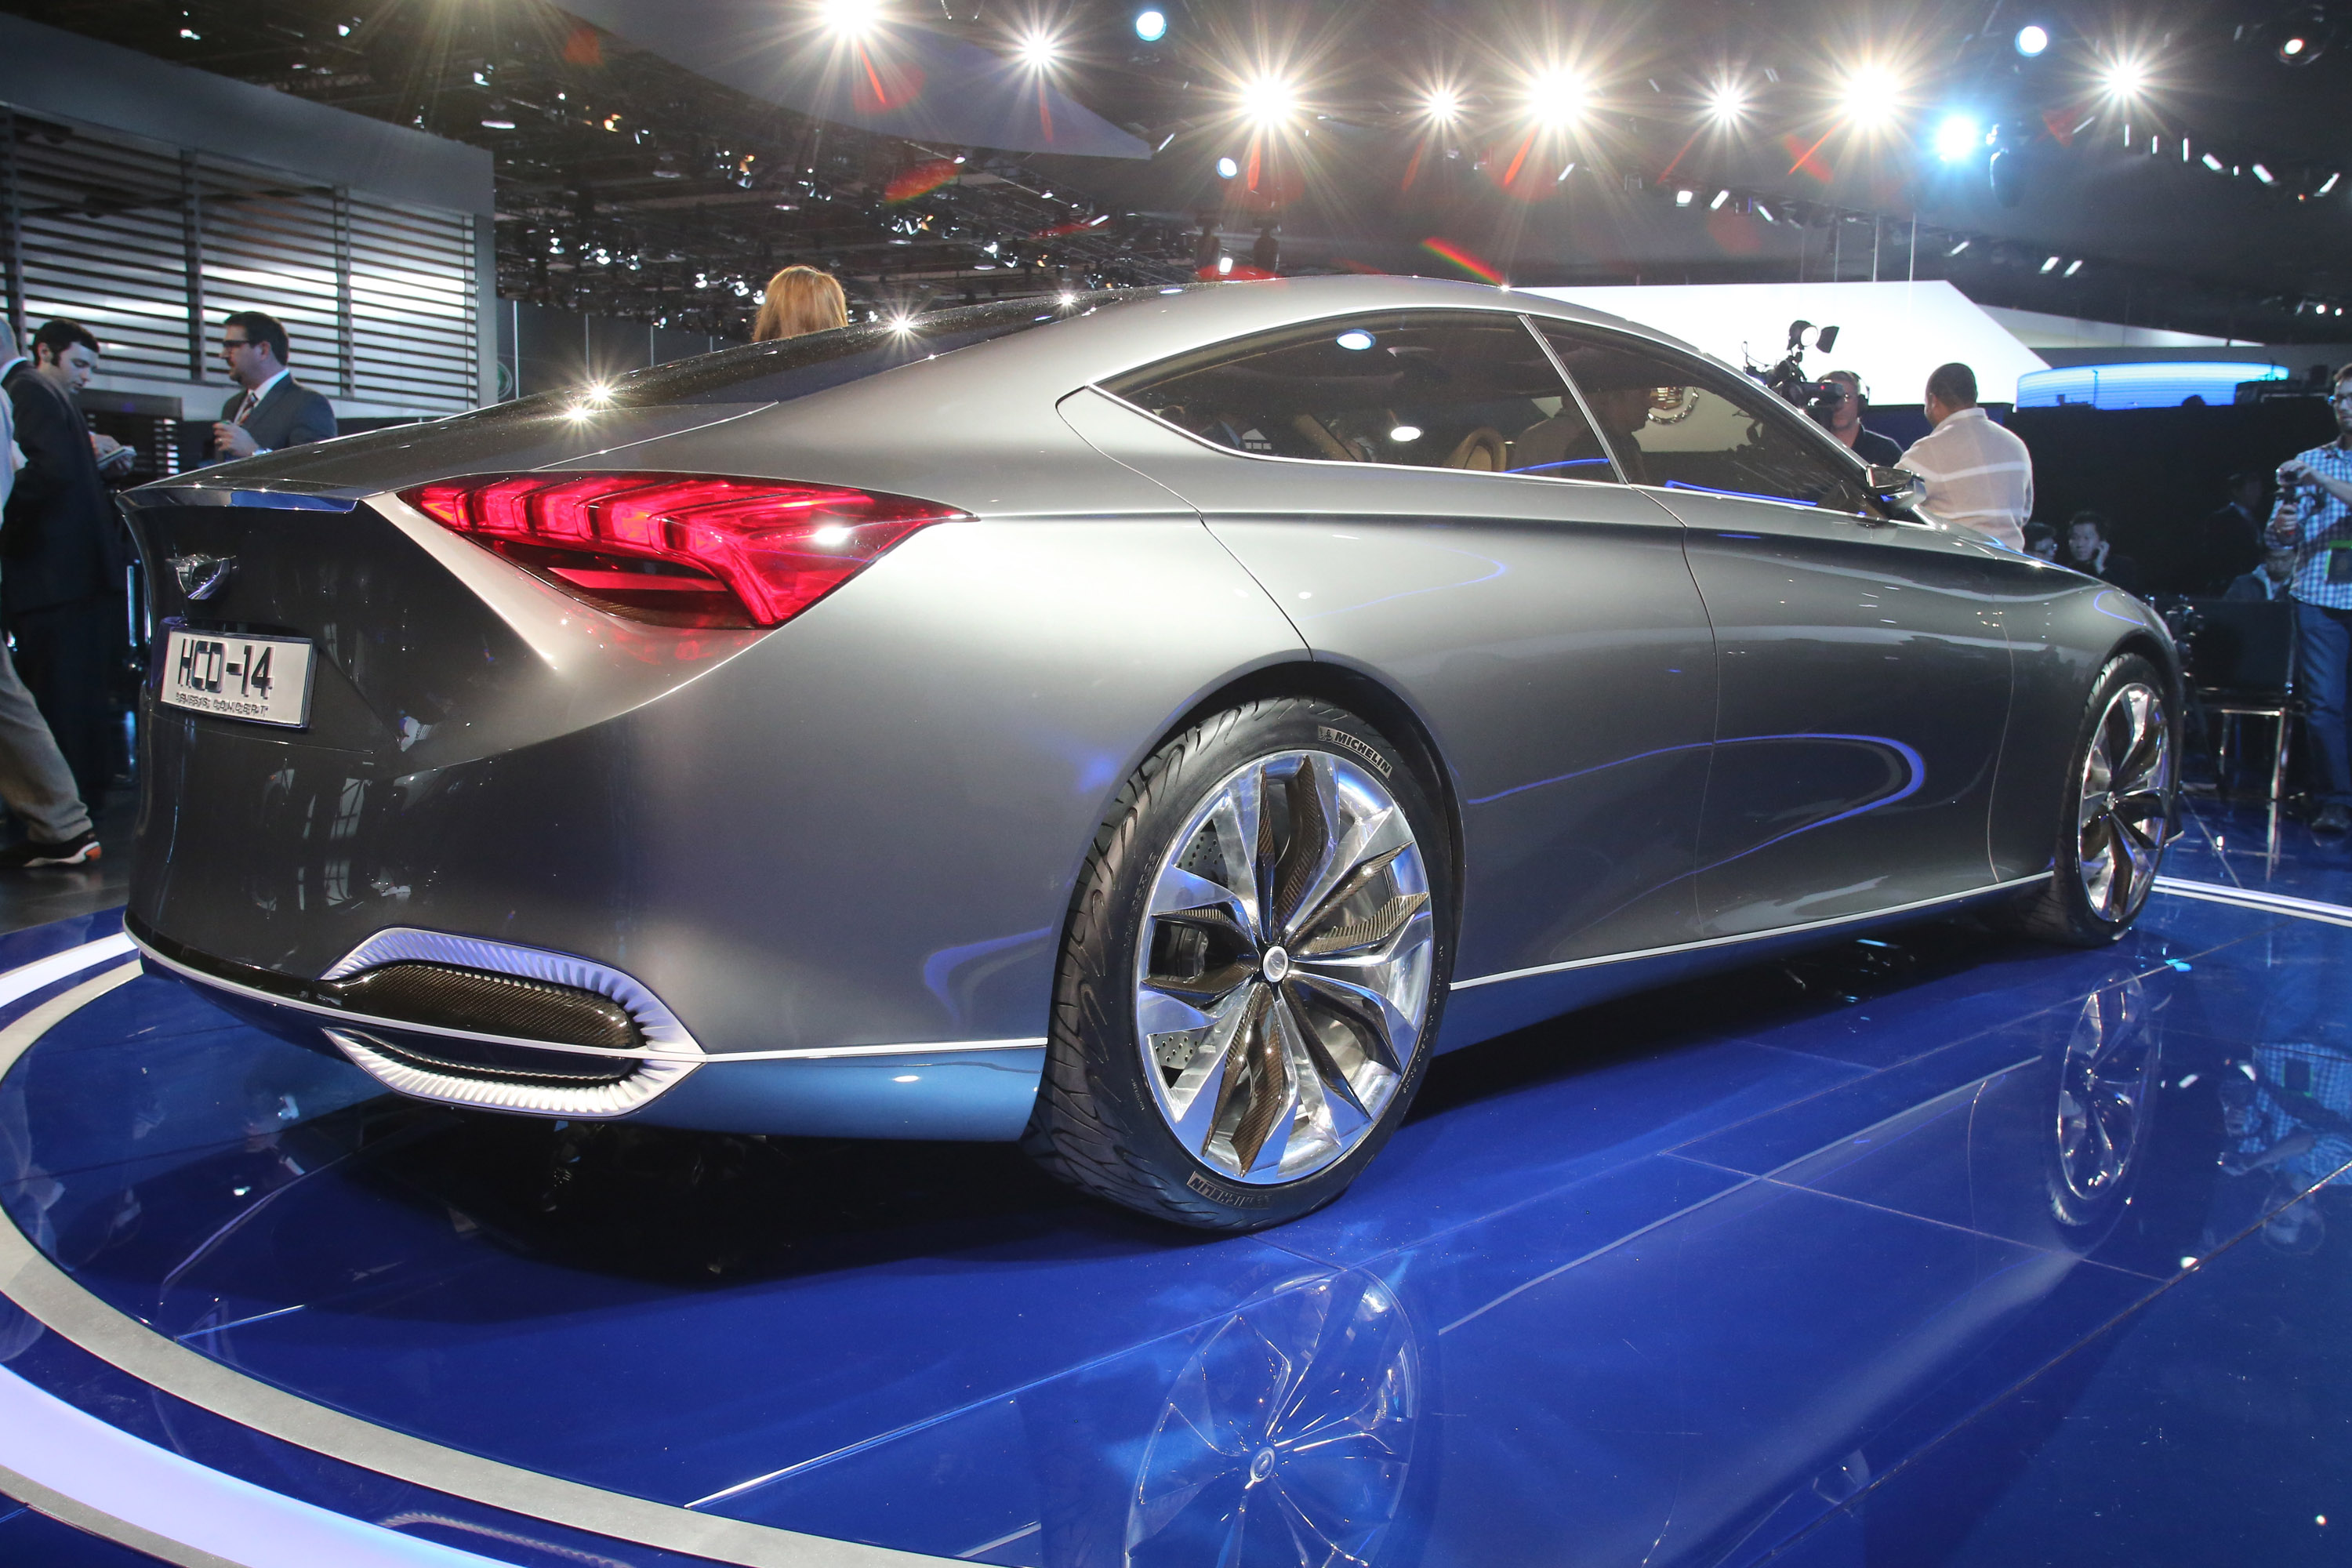 2013 Hyundai HCD 14 Genesis Concept